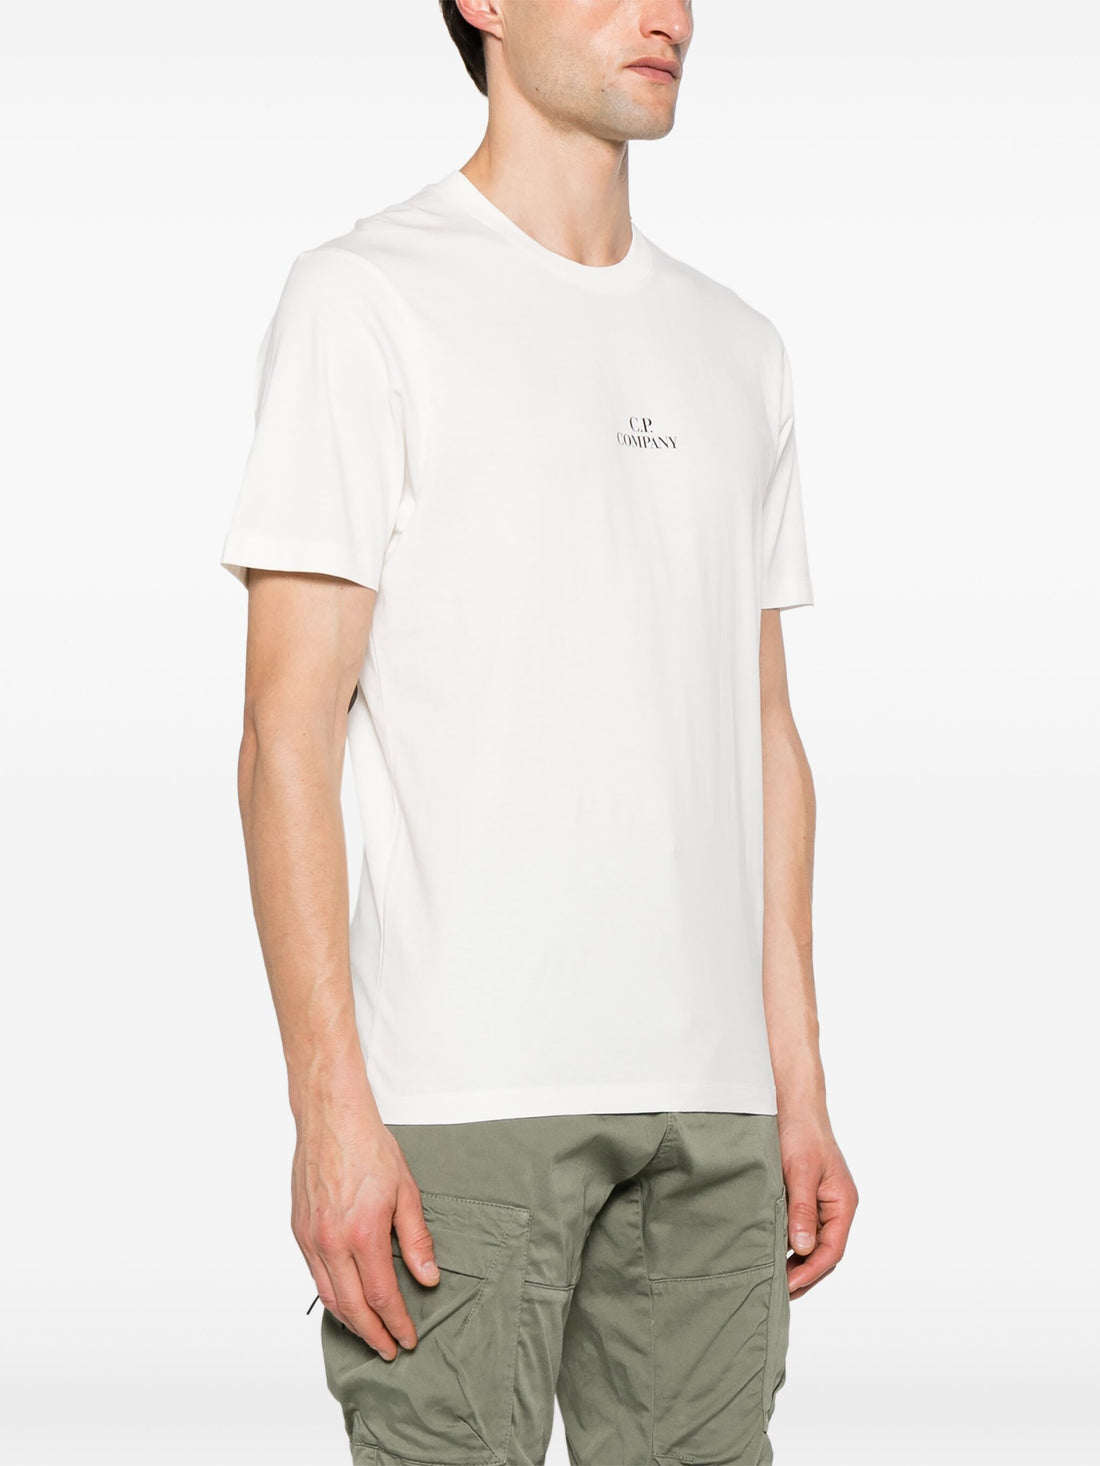 C.P. COMPANY Logo Graphic Print Cotton T-Shirt White - MAISONDEFASHION.COM